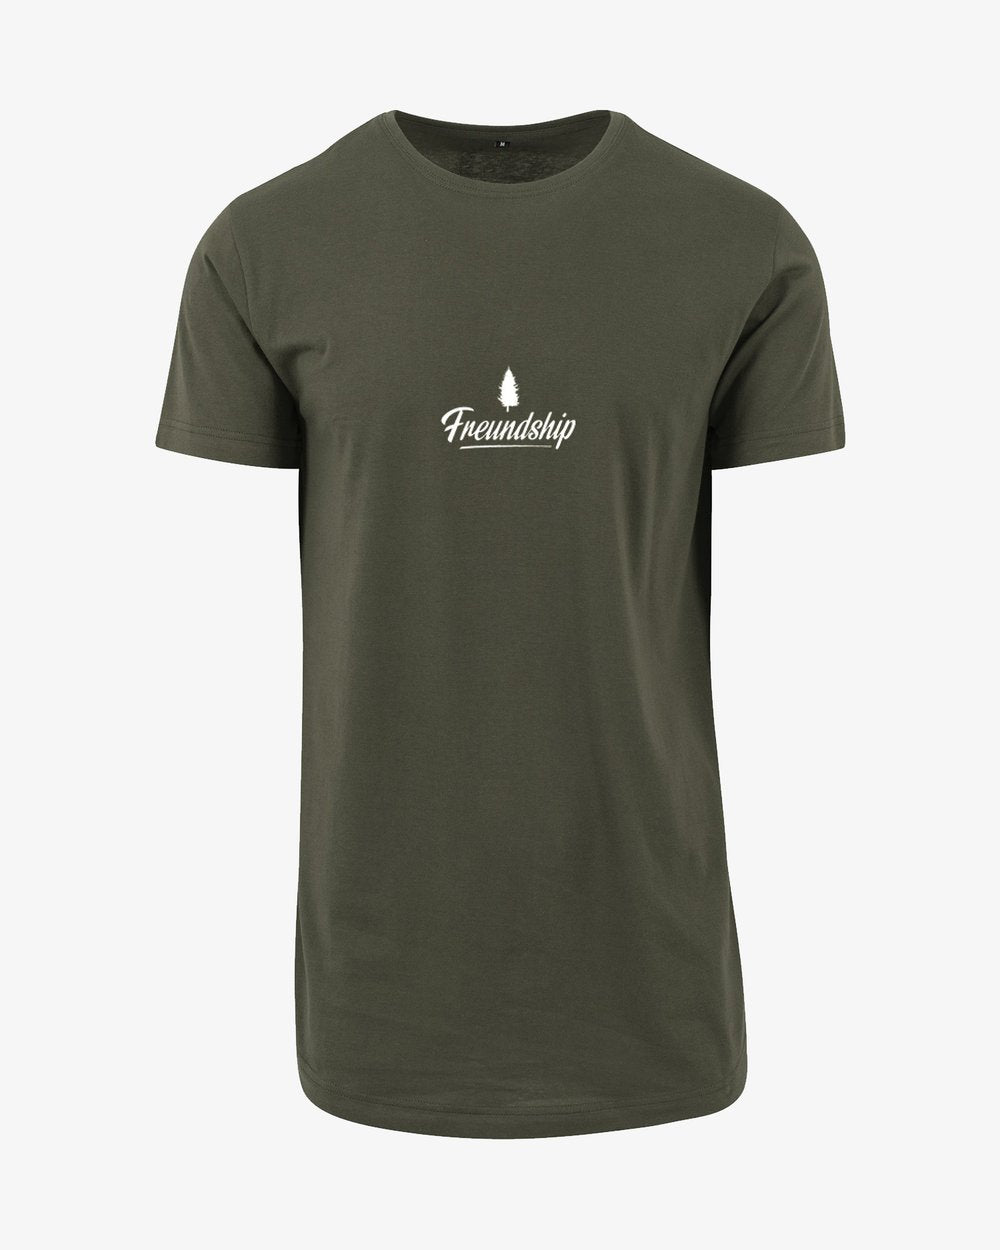 Freundship T-Shirt "einfach machen"